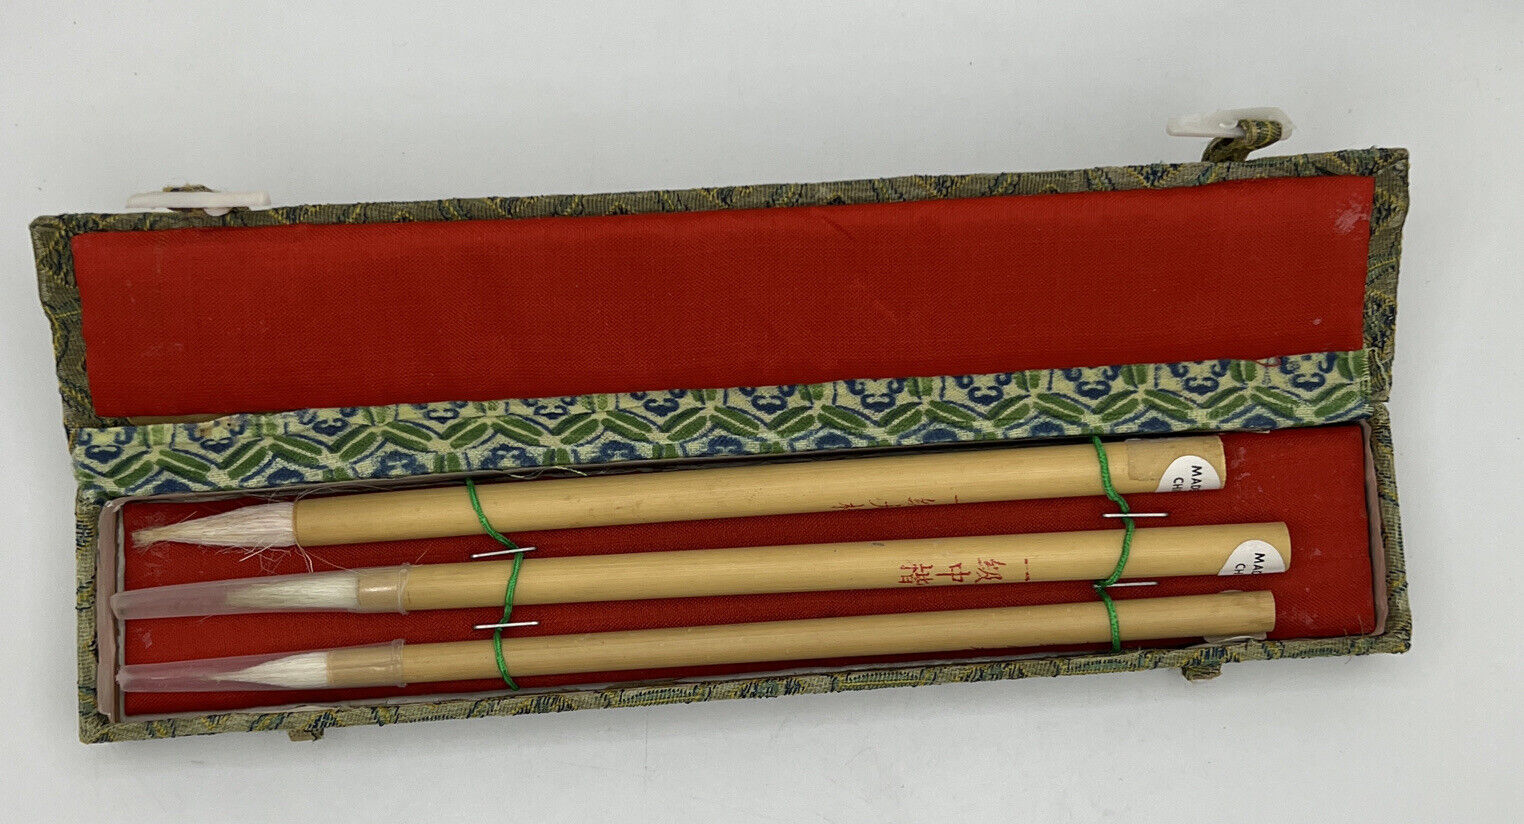 Vtg Hair Writing Brushes for Chinese Calligraphy Writing Brush Set of 3 Brushes